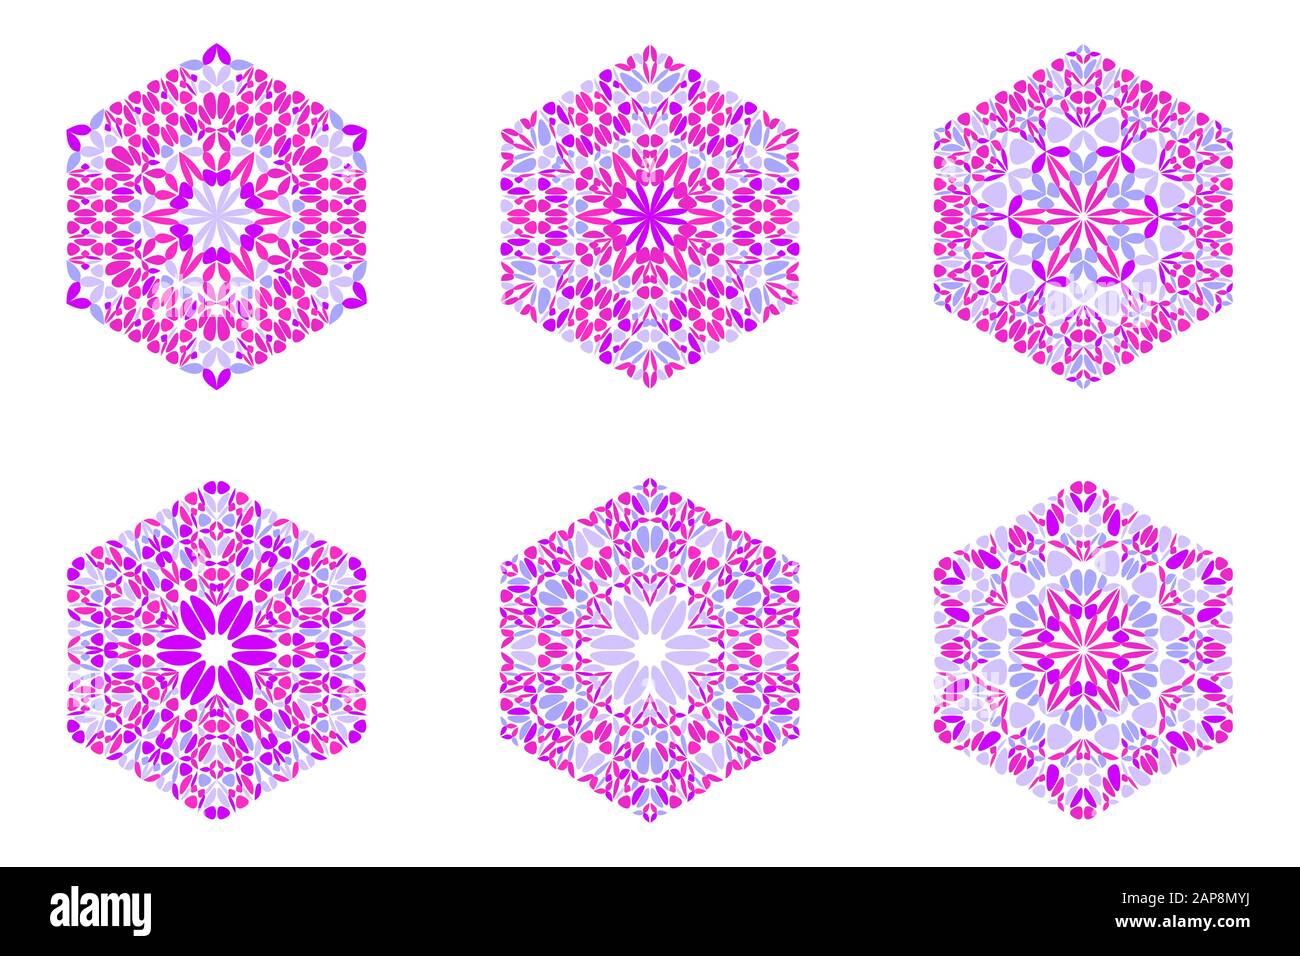 Isoliertes Blumenornament Sechskant Symbolschablone Set - geometrische geometrische ornamentale Vektorgrafikelemente Stock Vektor